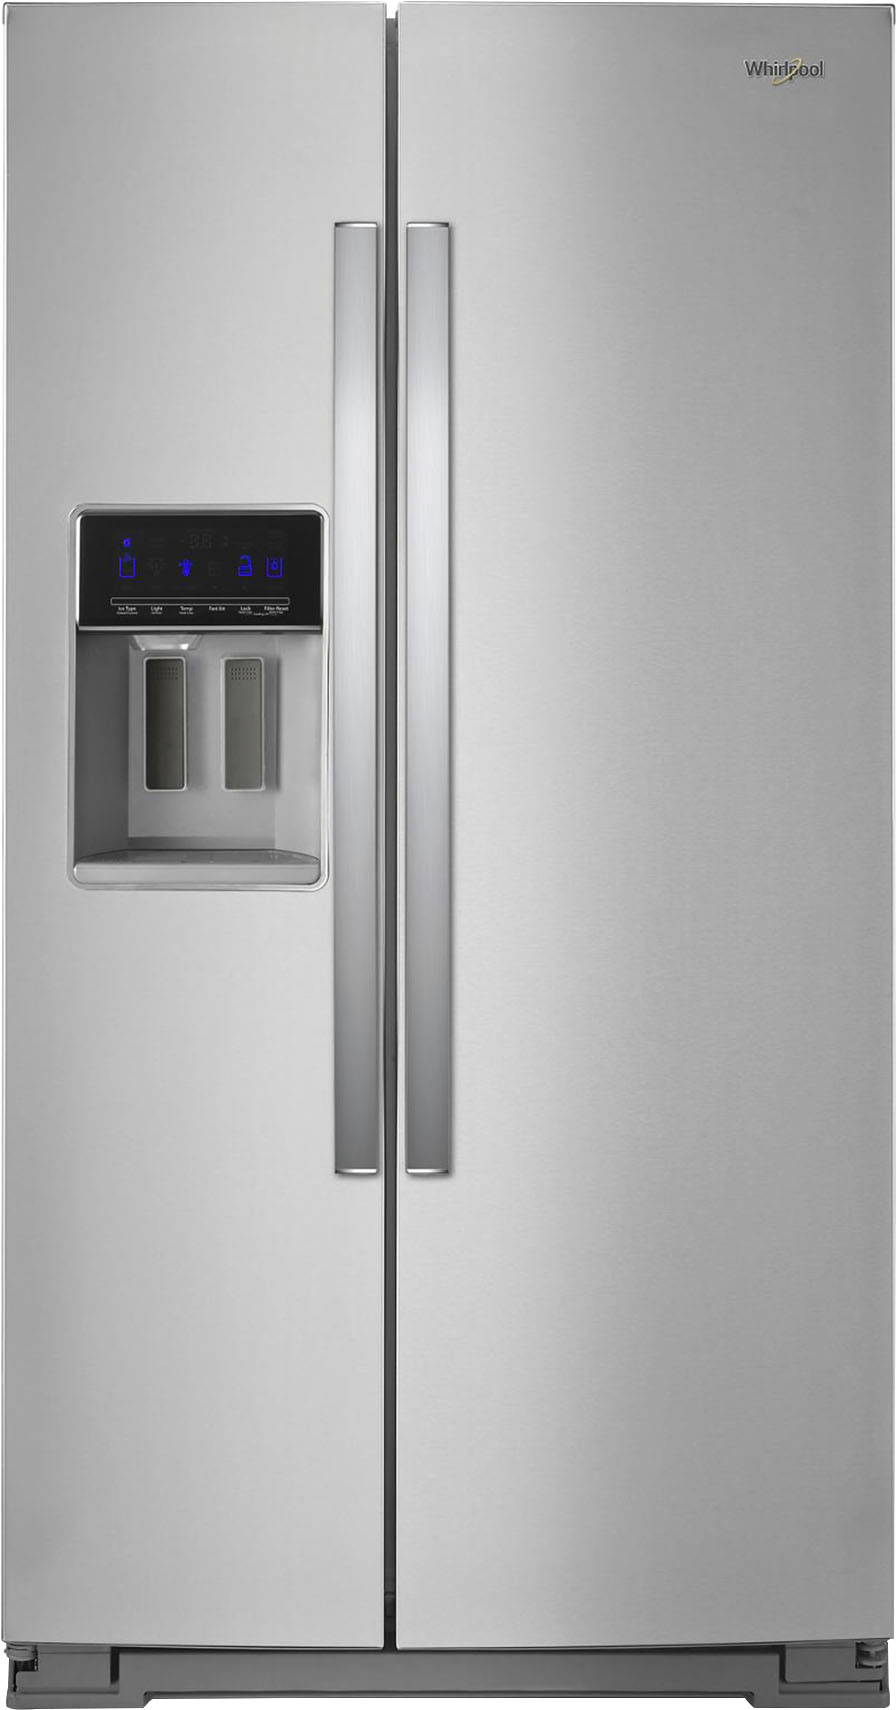 Whirlpool 20 6 Cu Ft, How To Put Door Shelves Back In Whirlpool Refrigerator